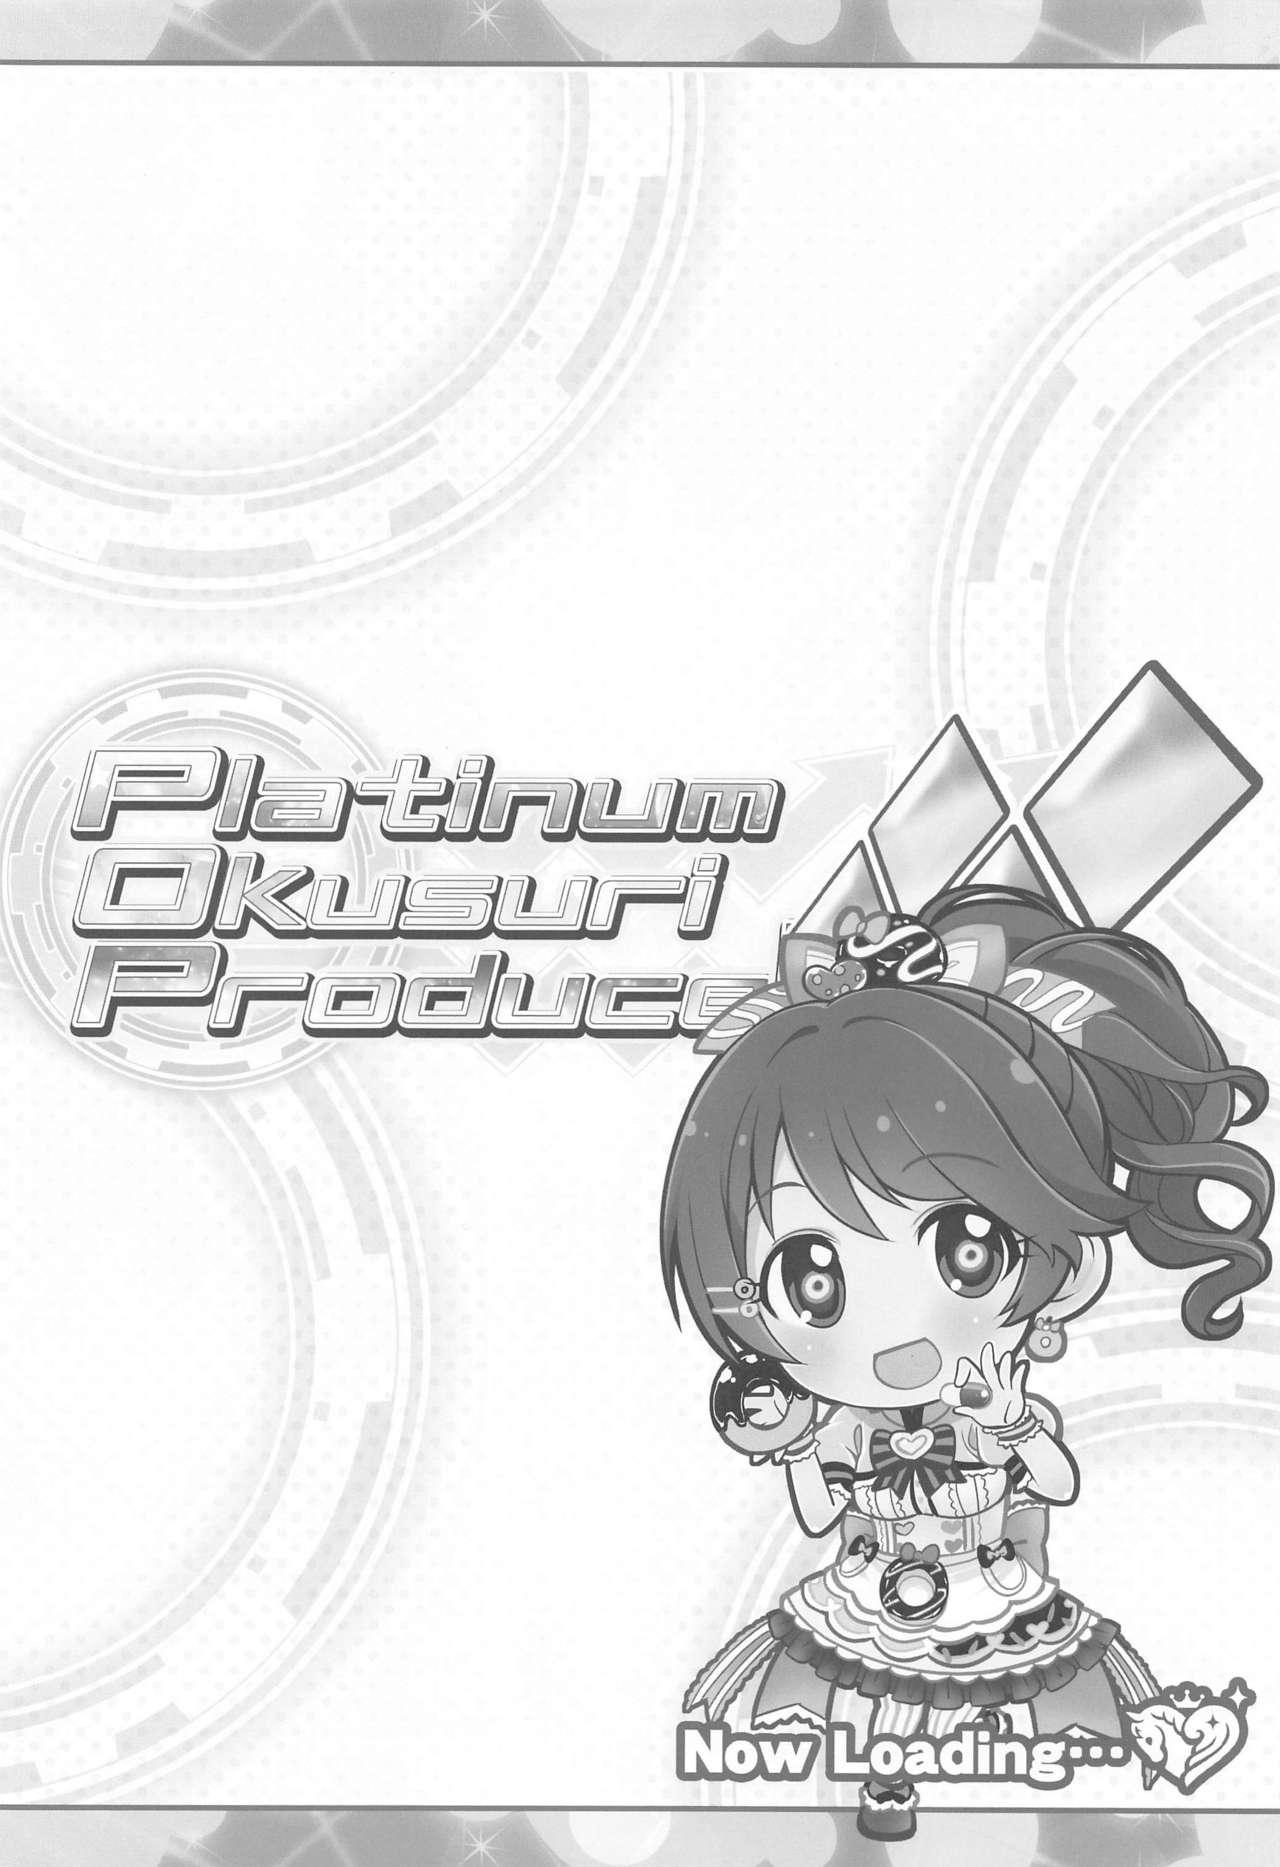 Platinum Okusuri Produce!!!! ◇◇◇◇ 2